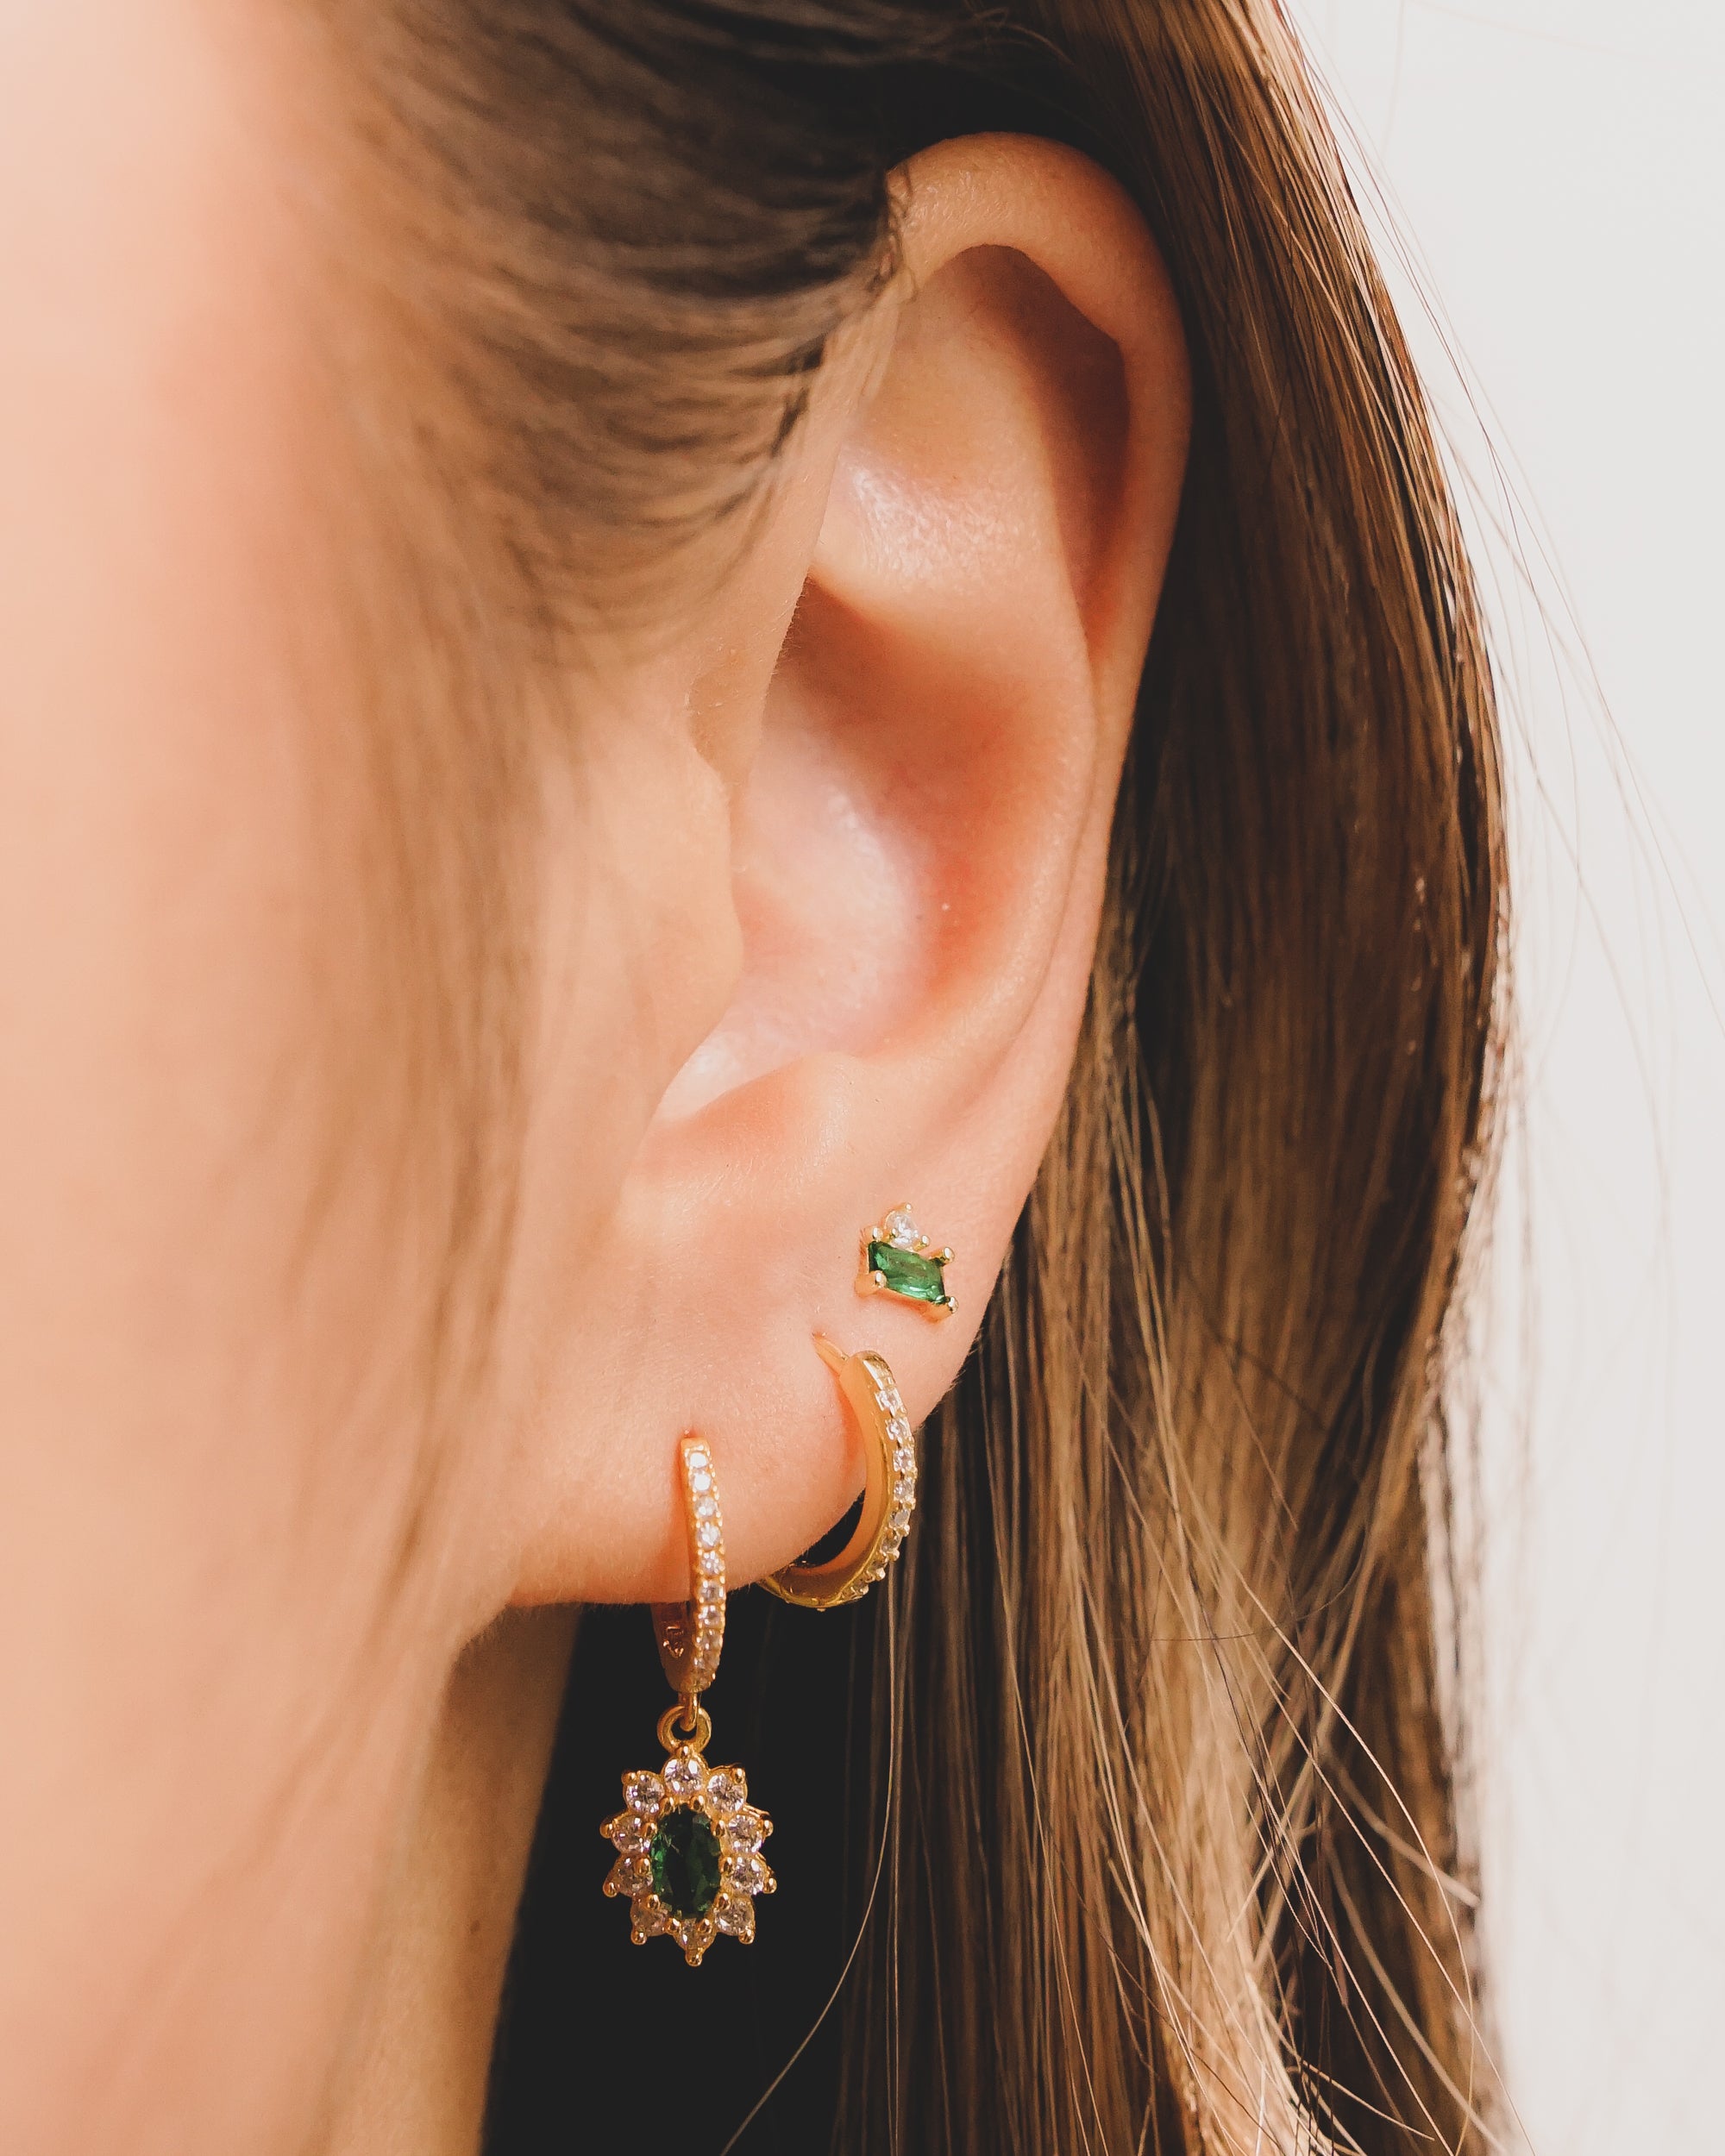 Mini Emerald Baguette and Bling Stud Earrings